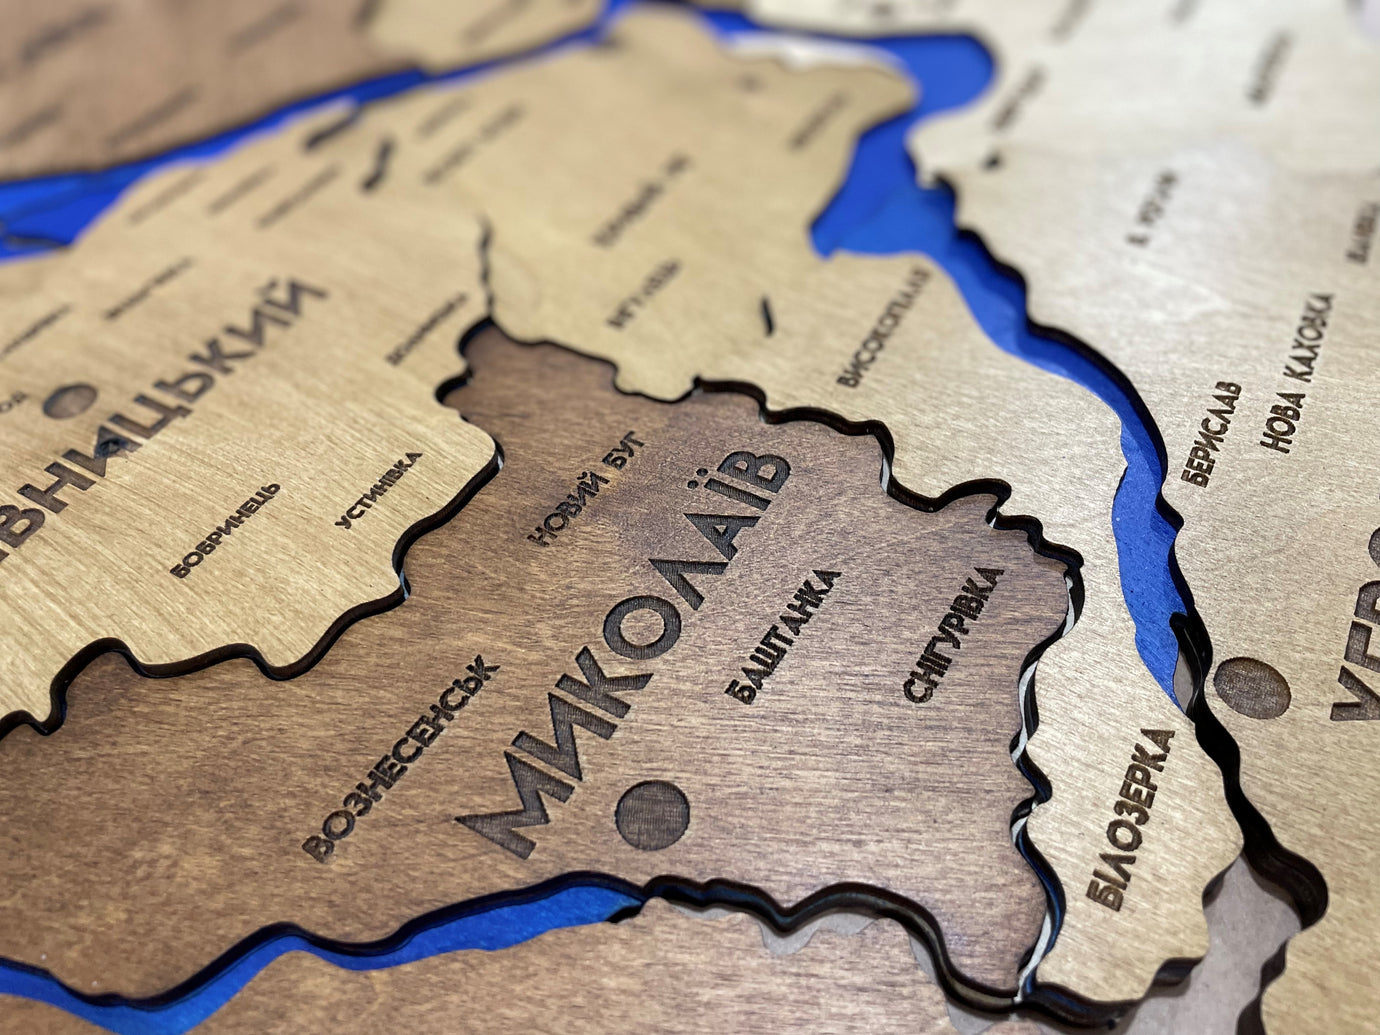 Detailed Ukraine 3D map with rivers palette Oak